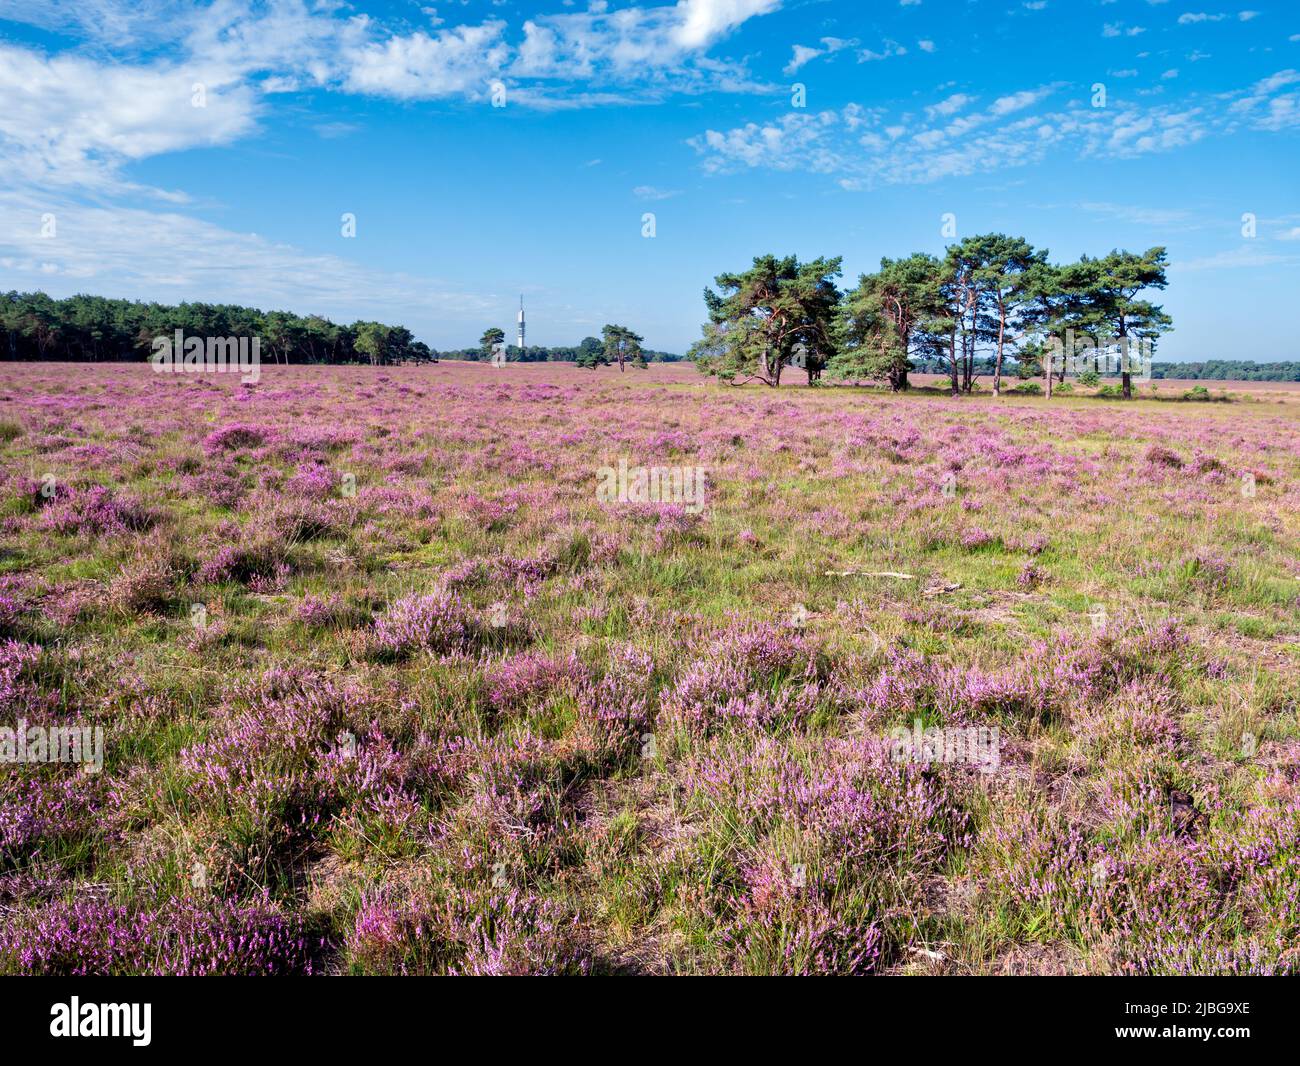 Heather Field in Bloom on Westerheide heathland in Gooi near Hilversum, Netherlands Stockfoto